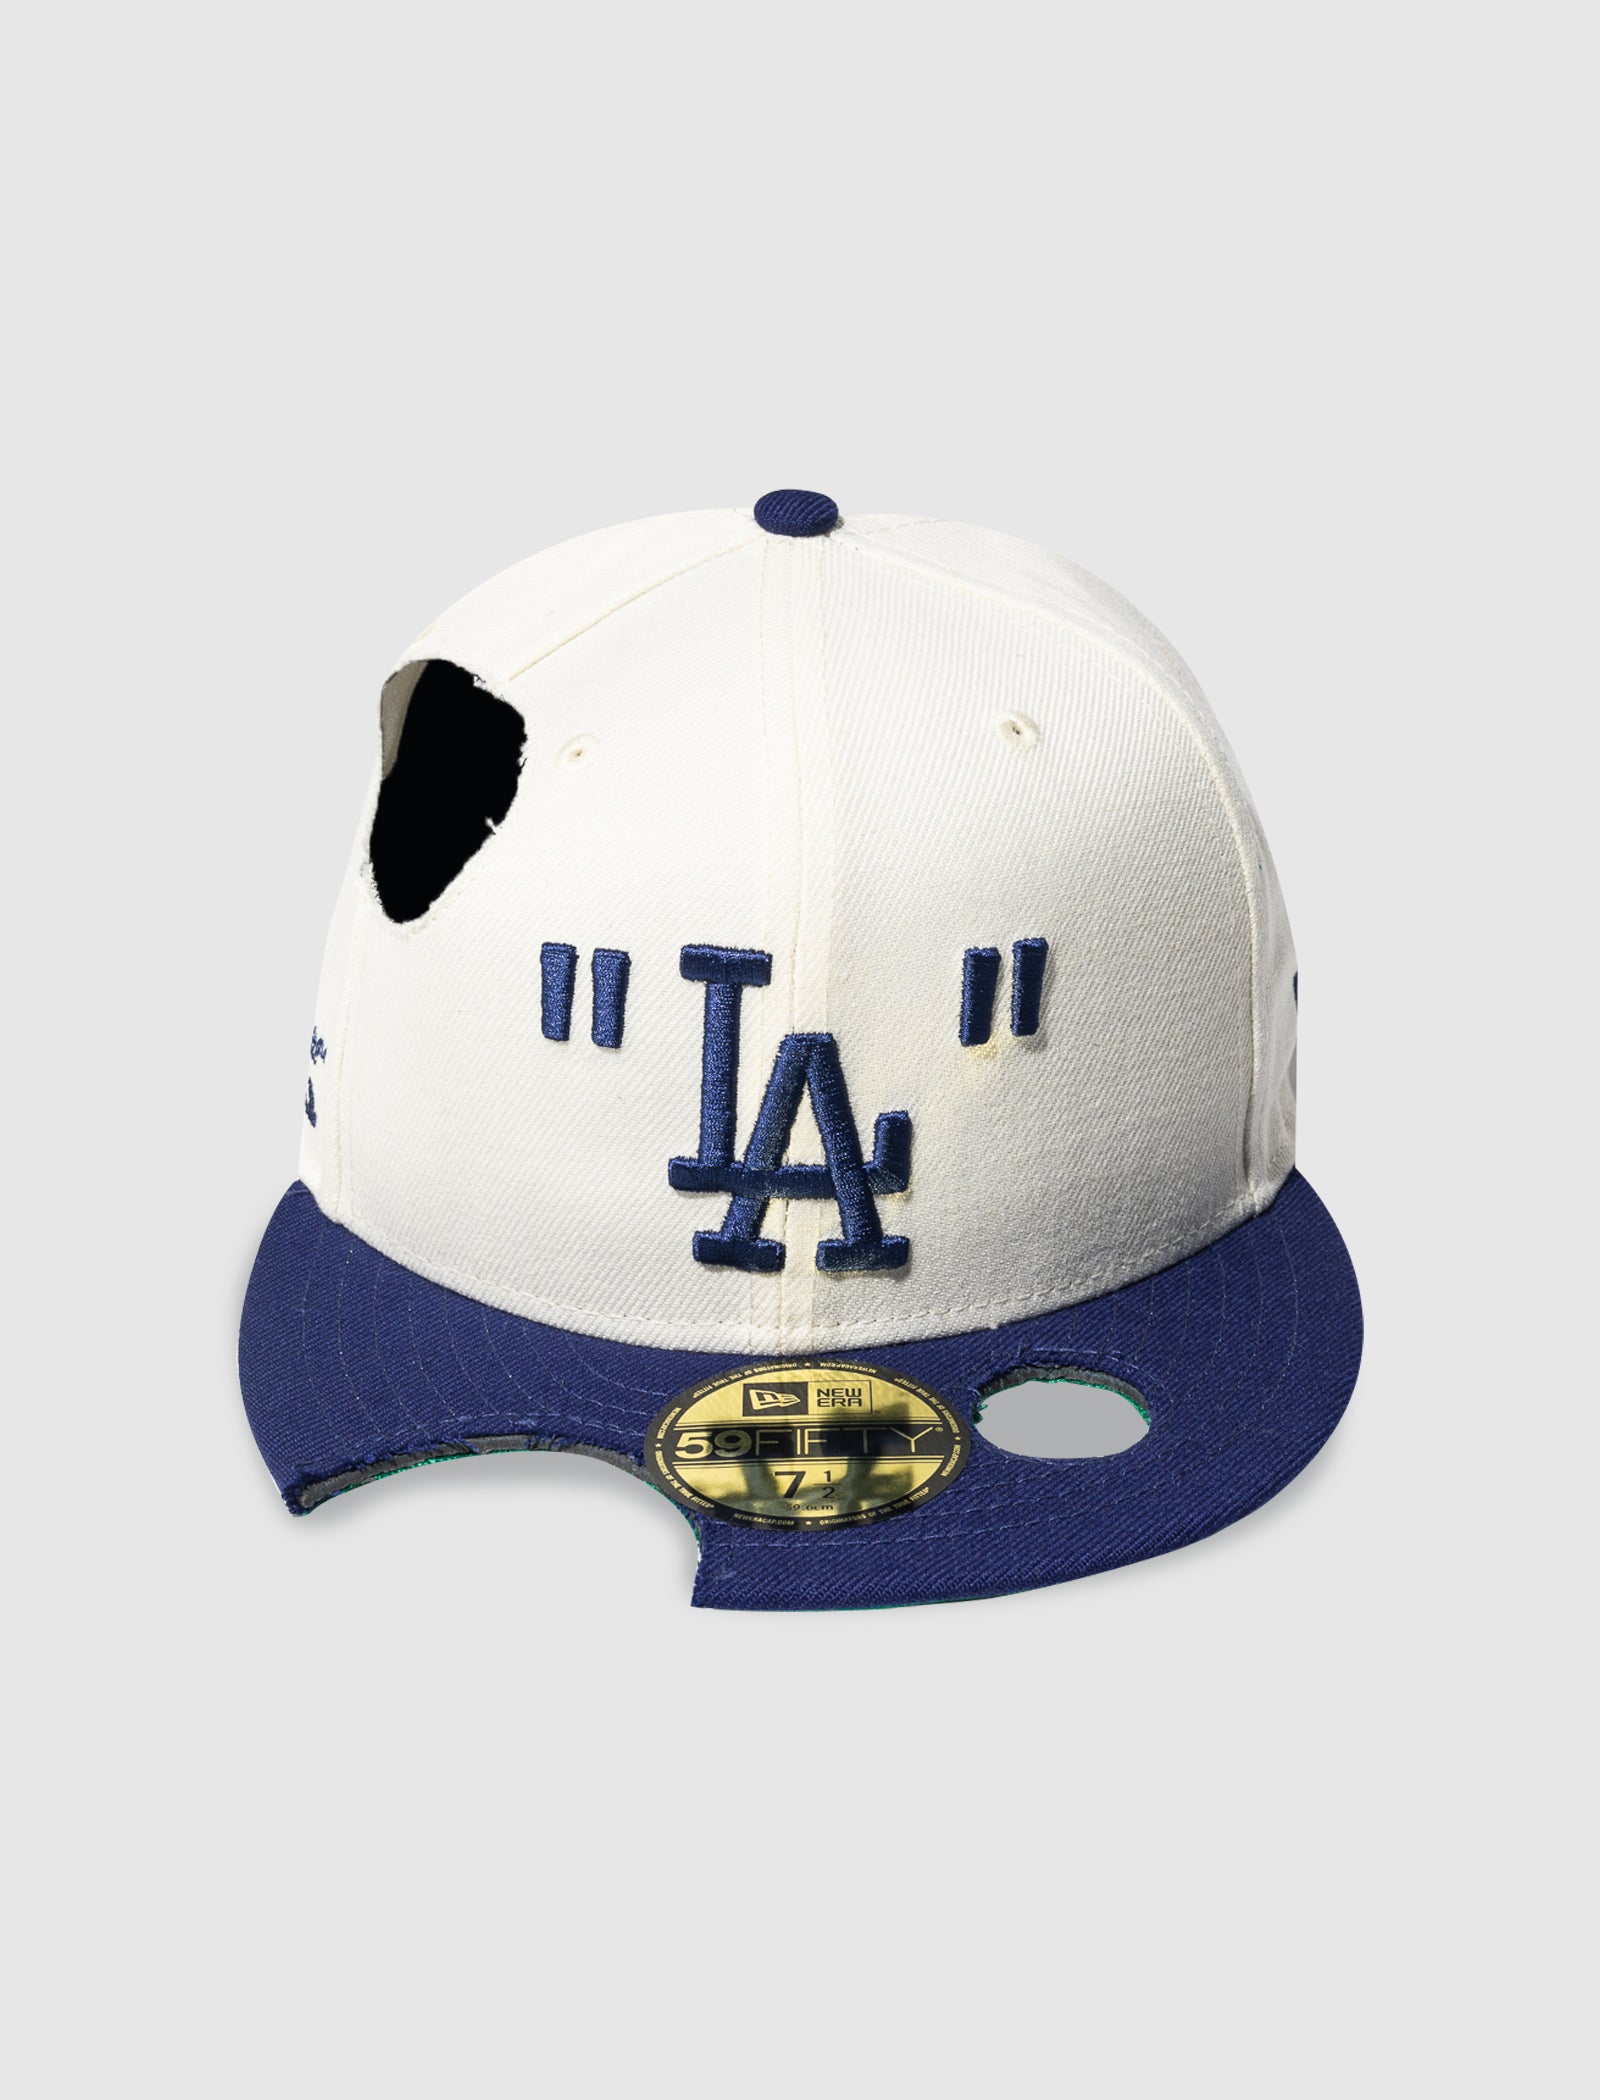 OFF-WHITE x MLB LA DODGERS CAP